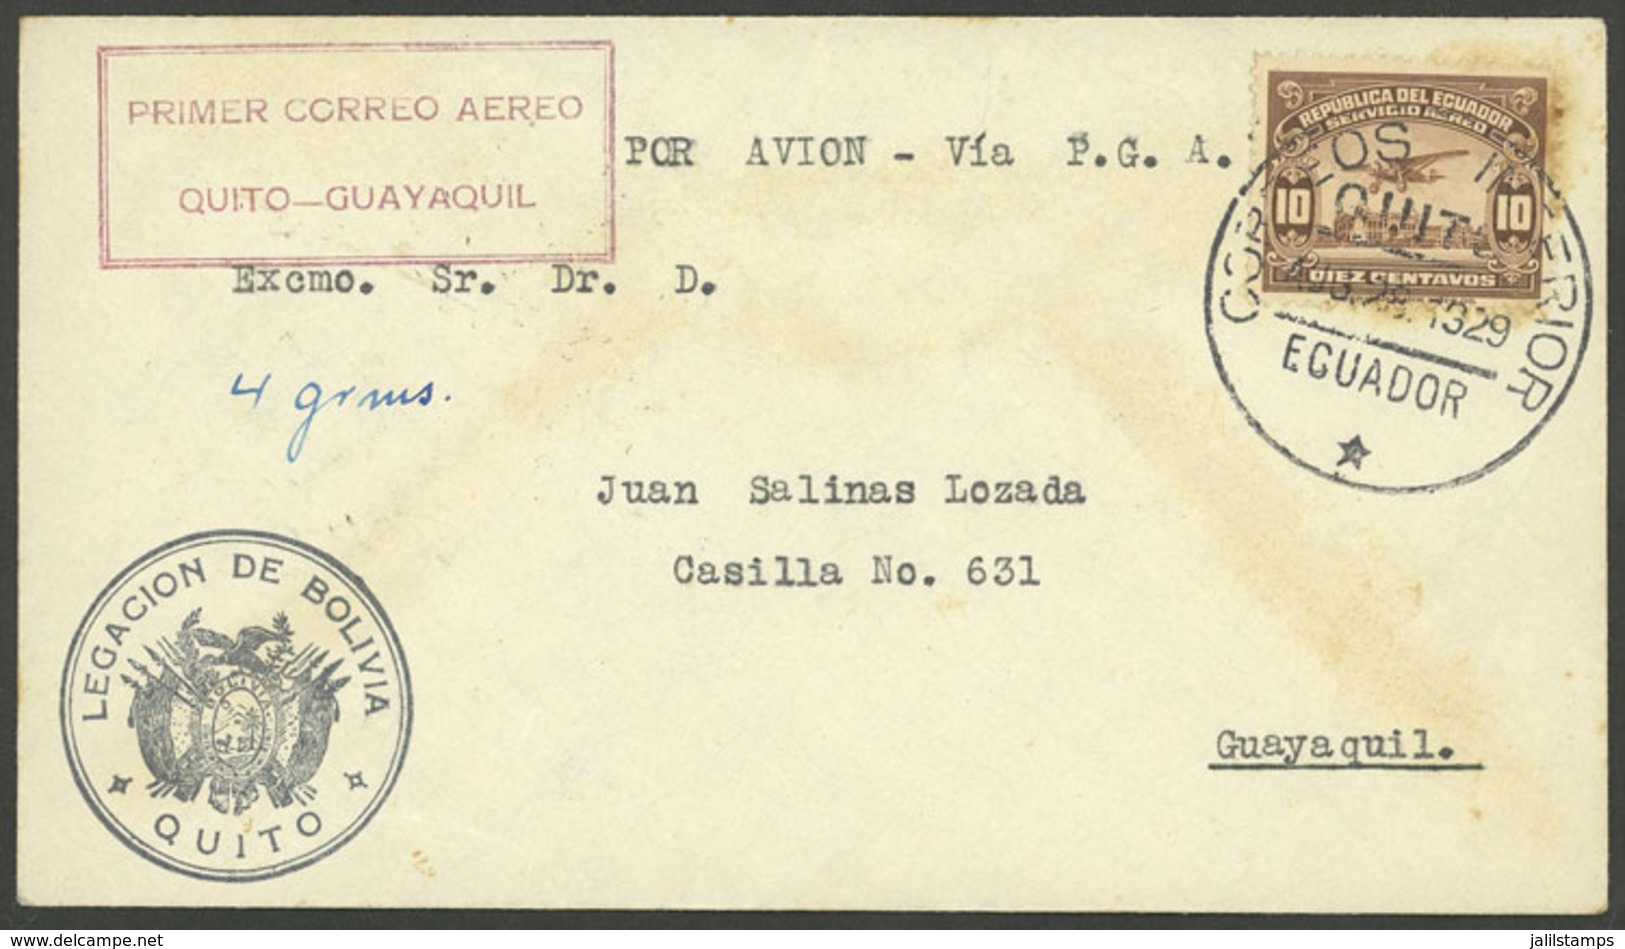 ECUADOR: 28/AU/1929 Quito - Guayaquil, PANAGRA First Flight, Cover With Special Cachet And Arrival Mark On Back, VF! - Ecuador